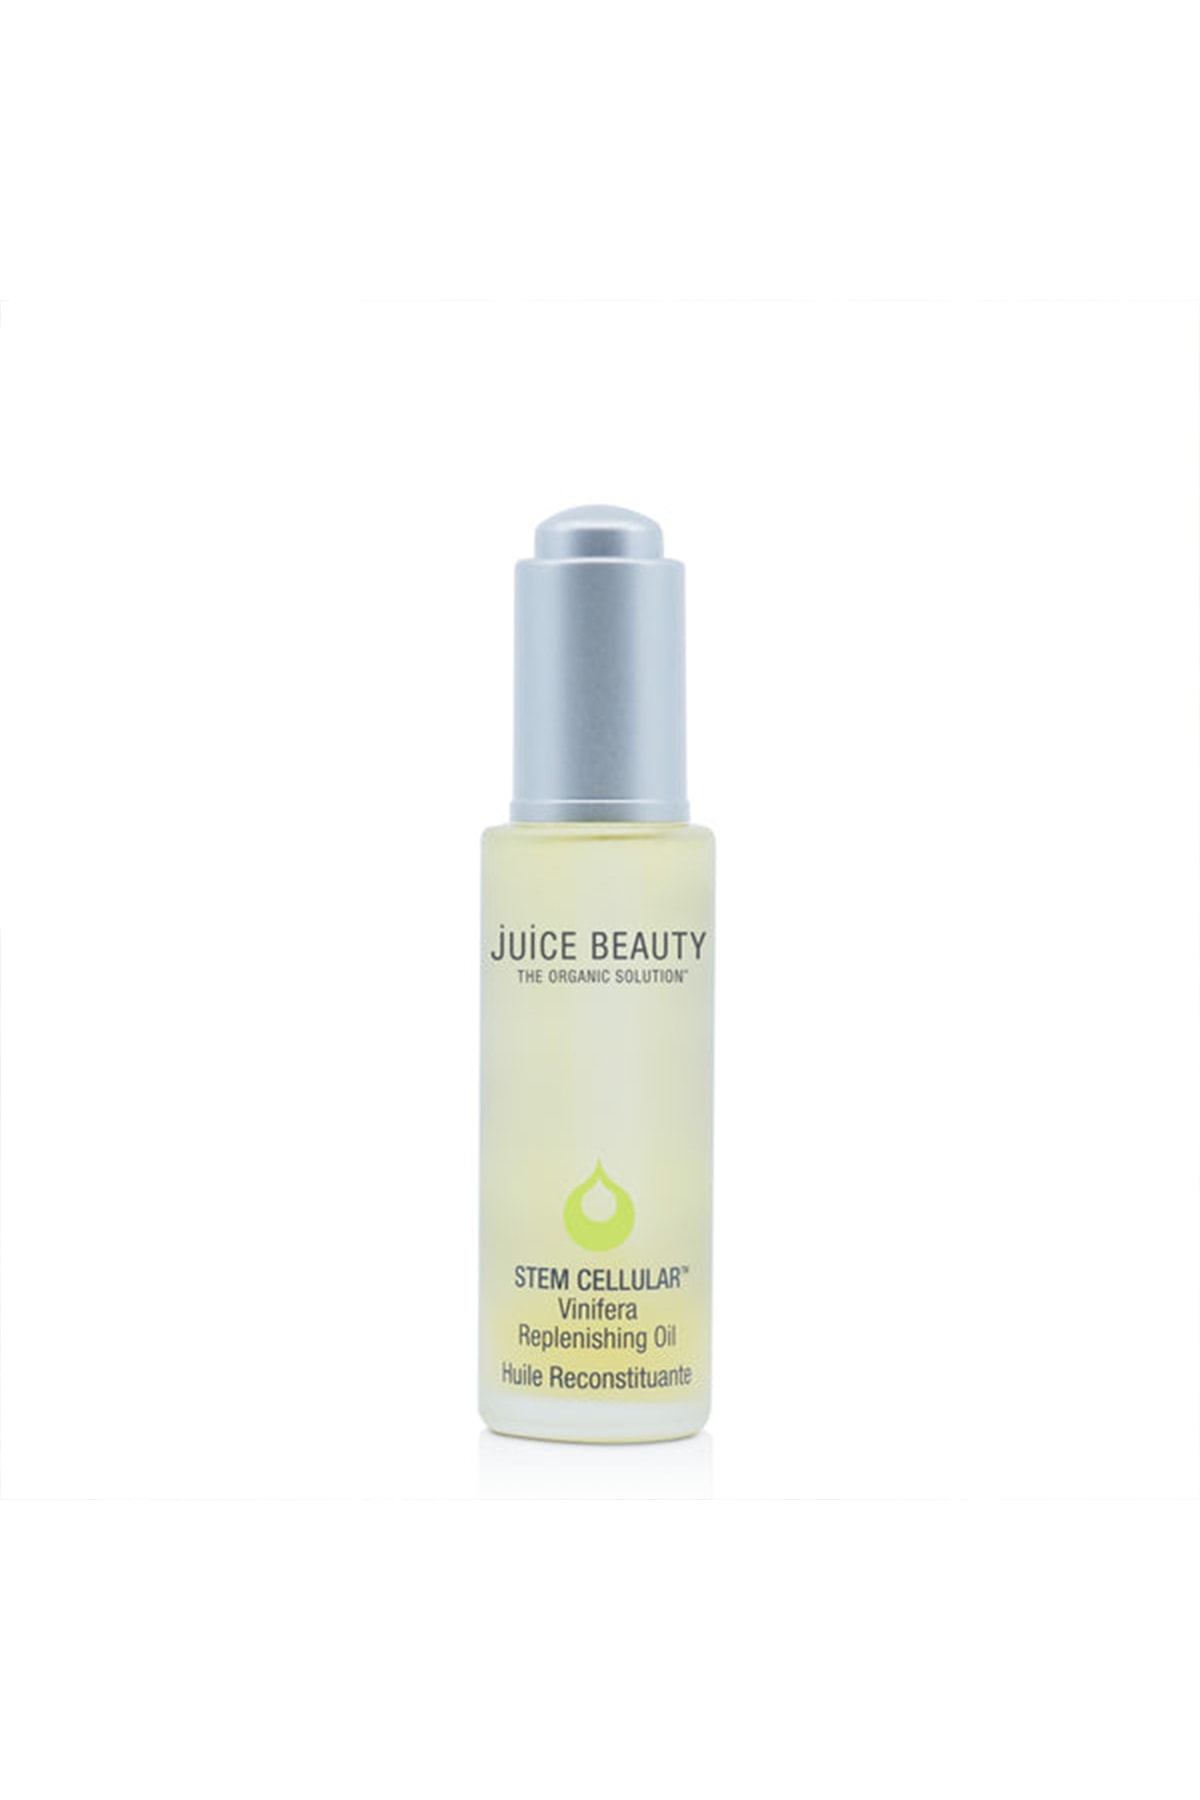 Juice Beauty Stem Cellular™ Vinifera Replenishing Oil - 30 Ml